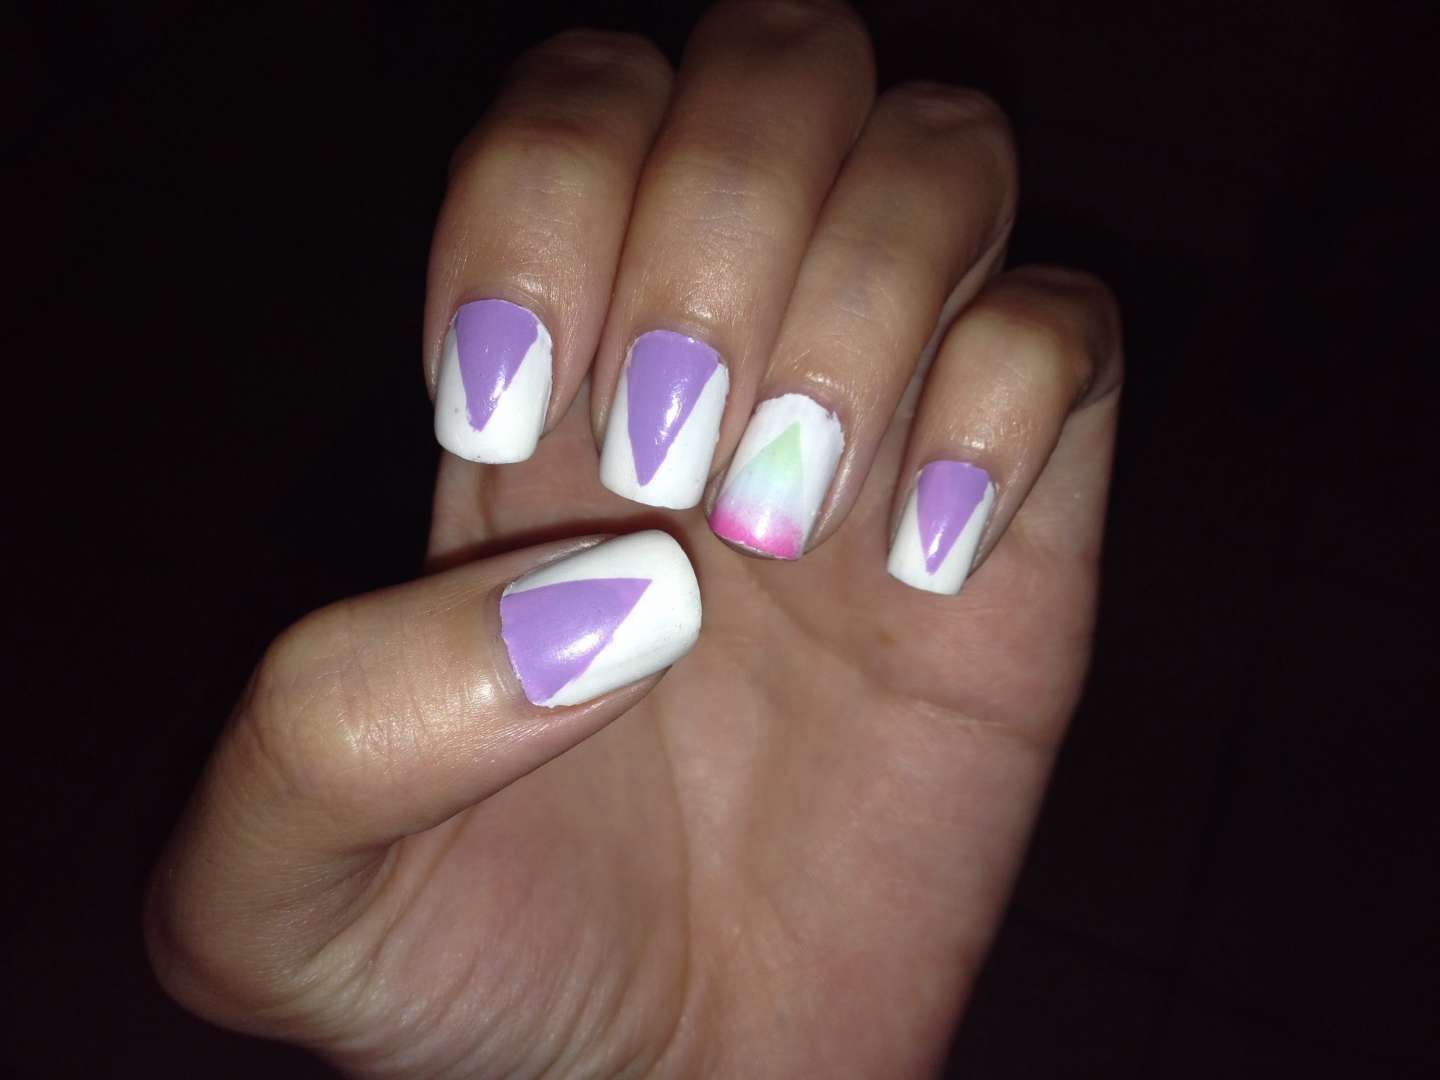 Triangle nail bianca e viola